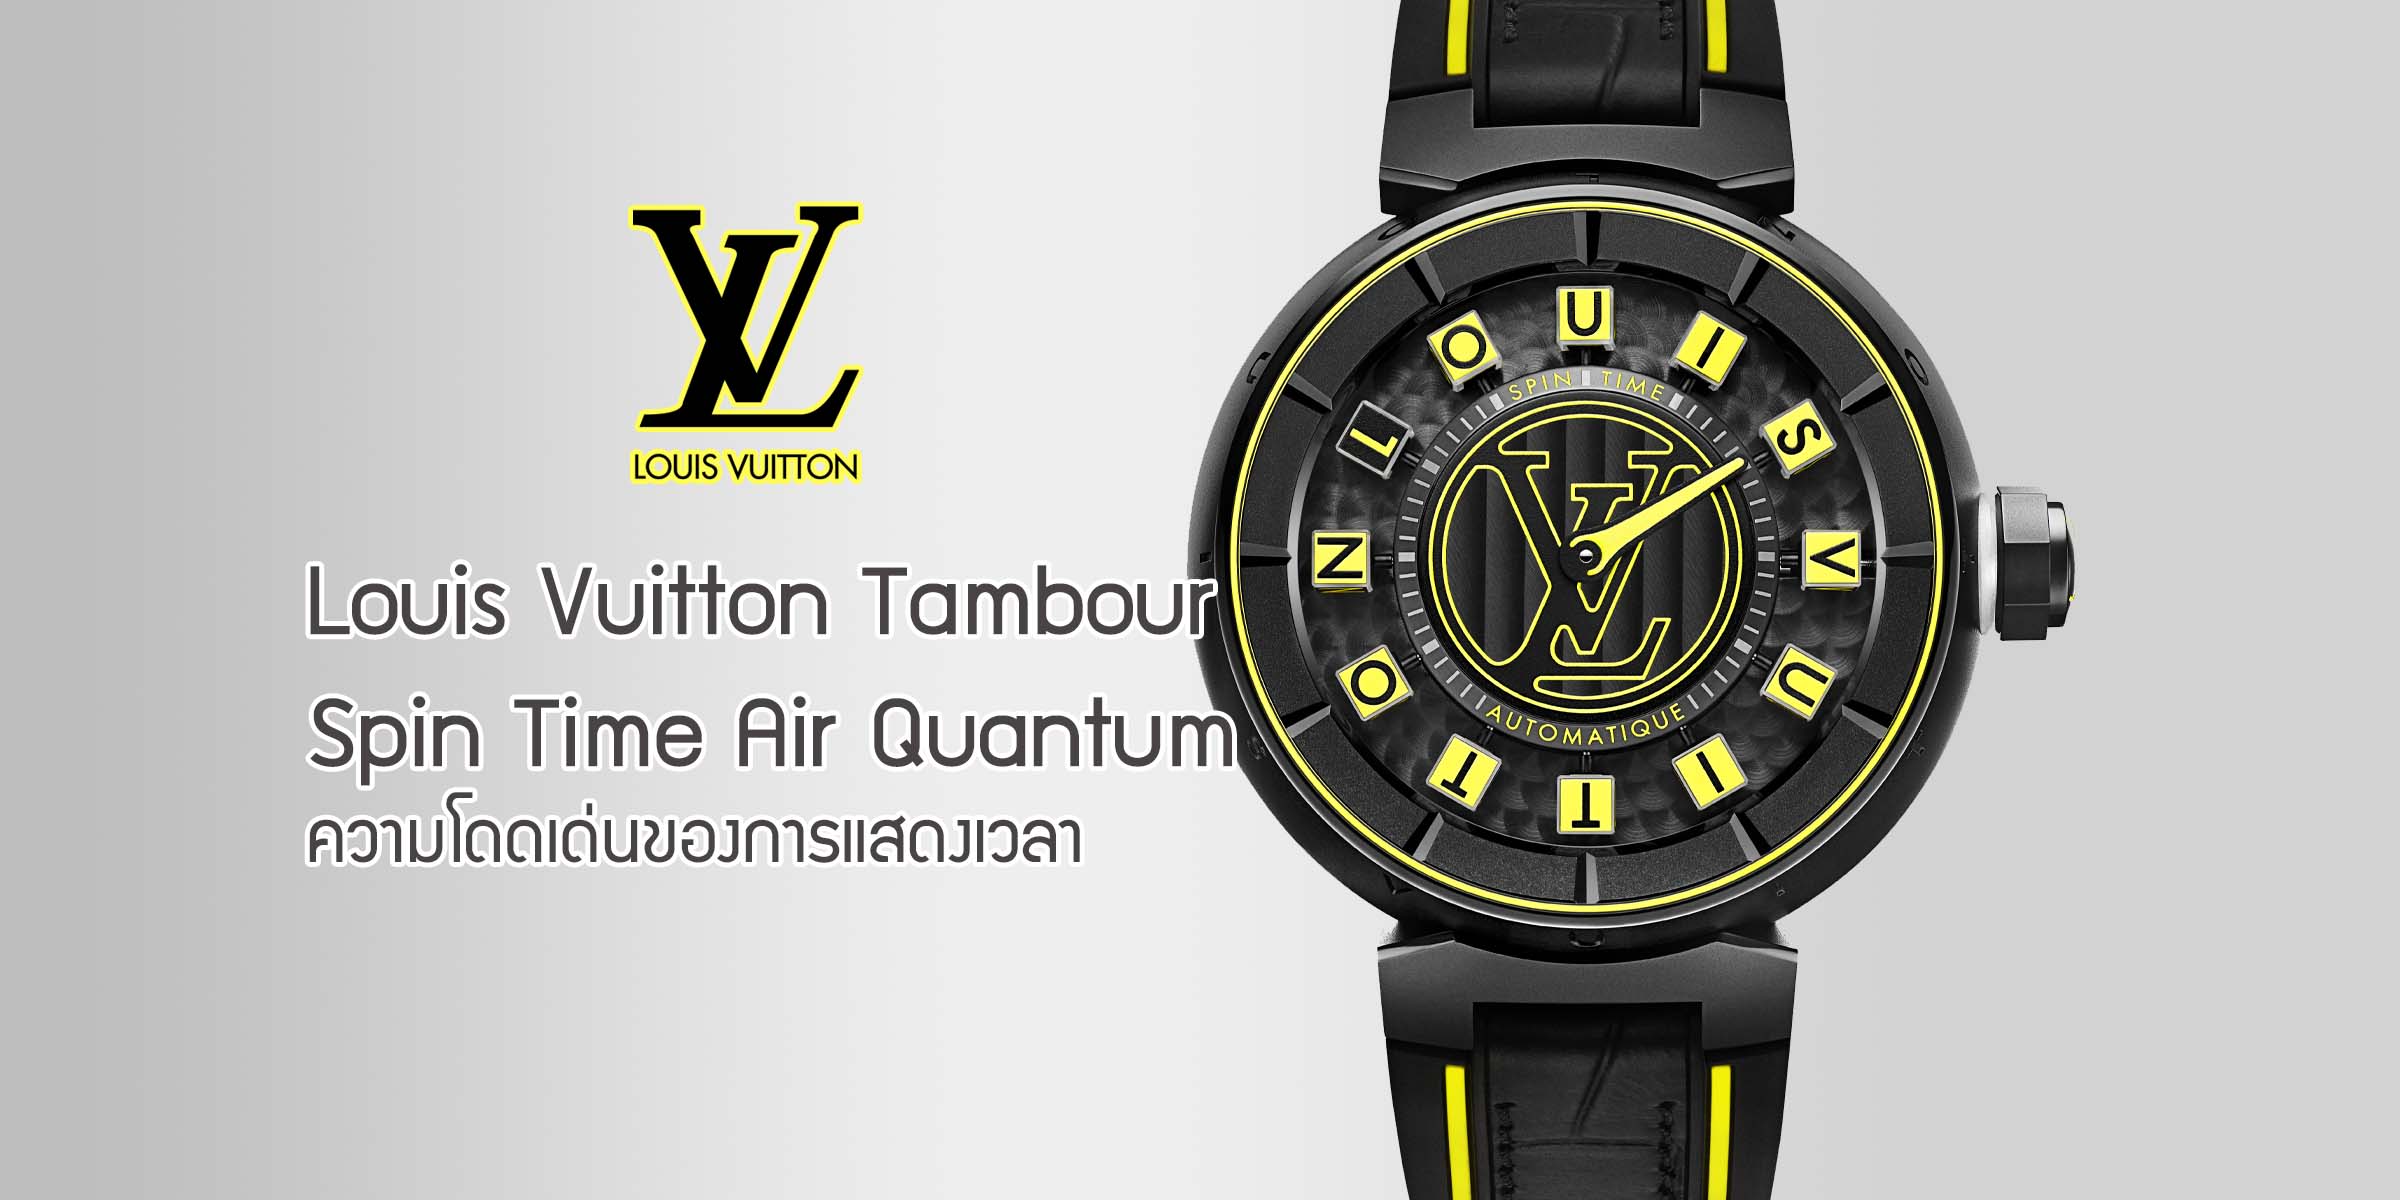 Louis Vuitton Tambour Spin Time Air Quantum